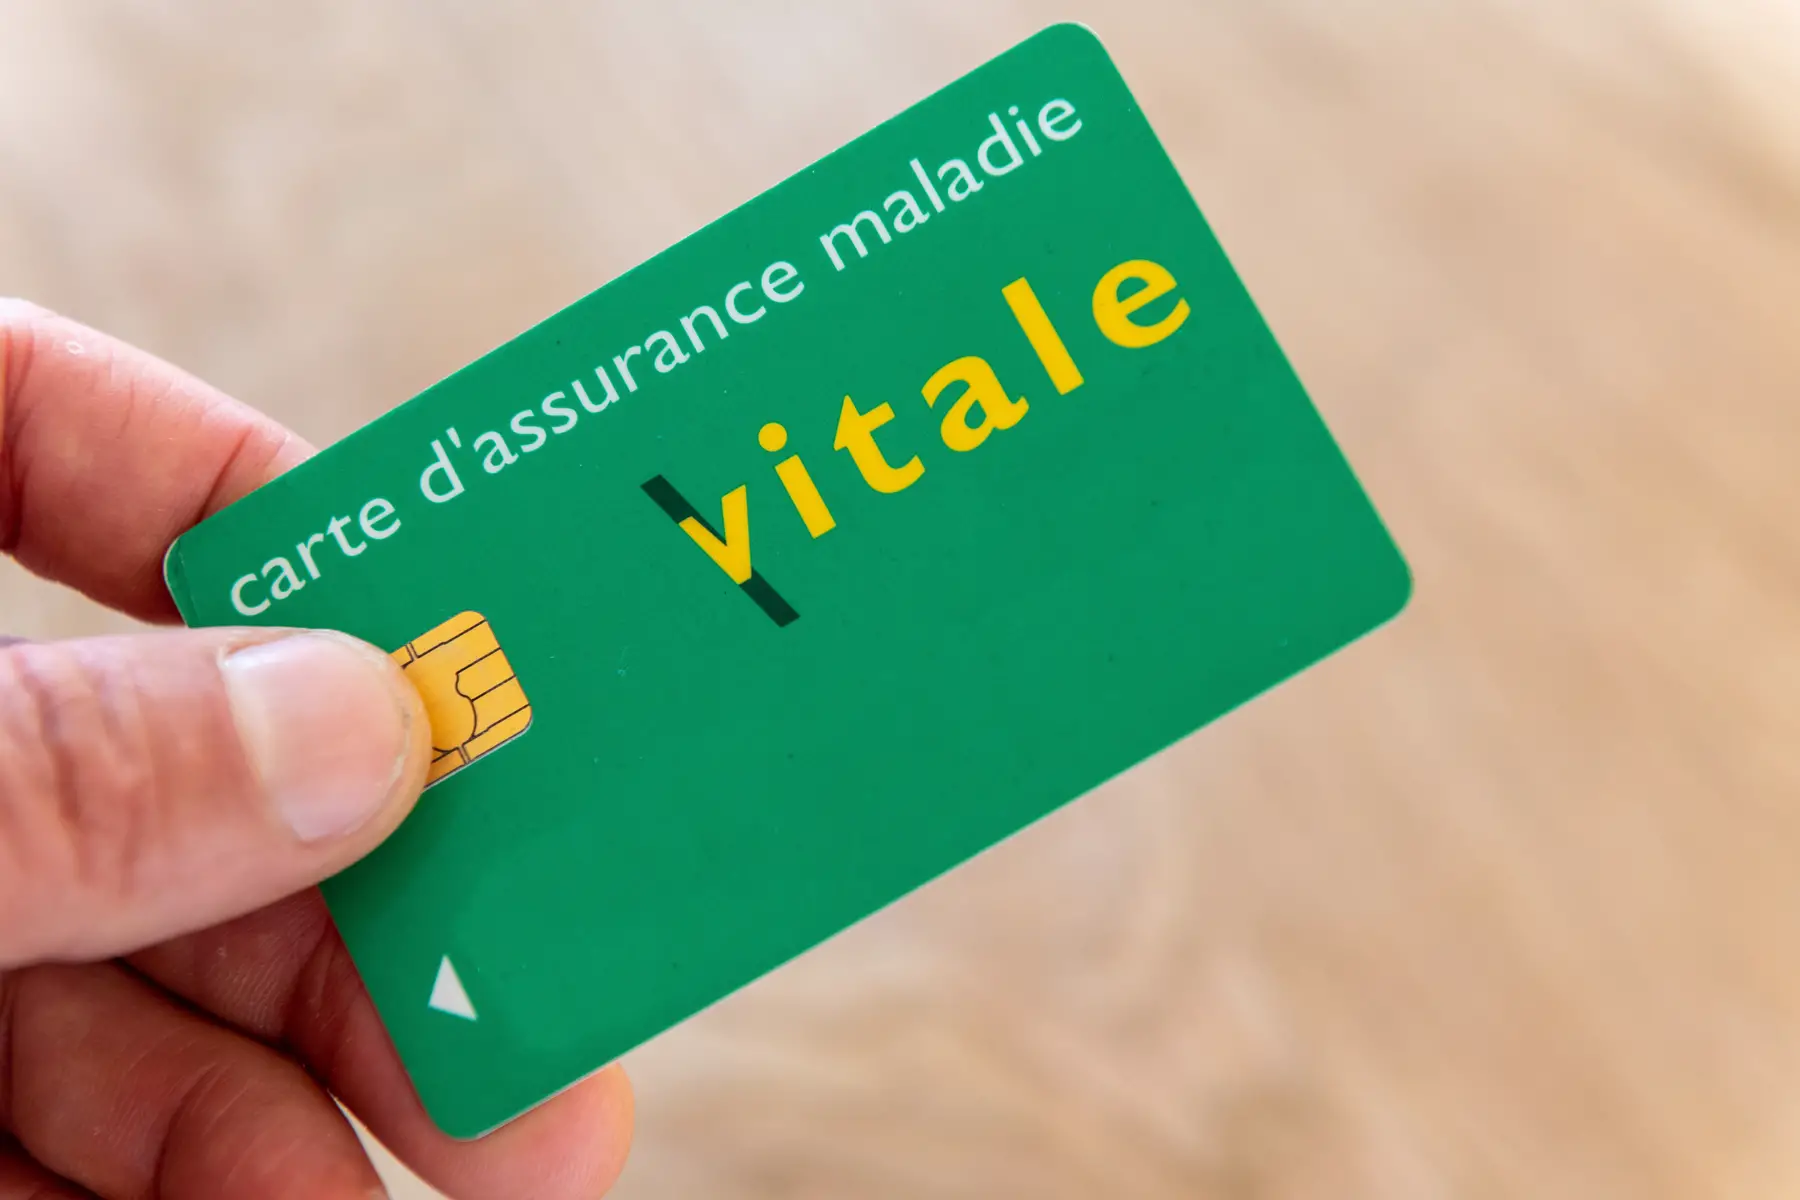 carte vitale, the health insurance card for children in France